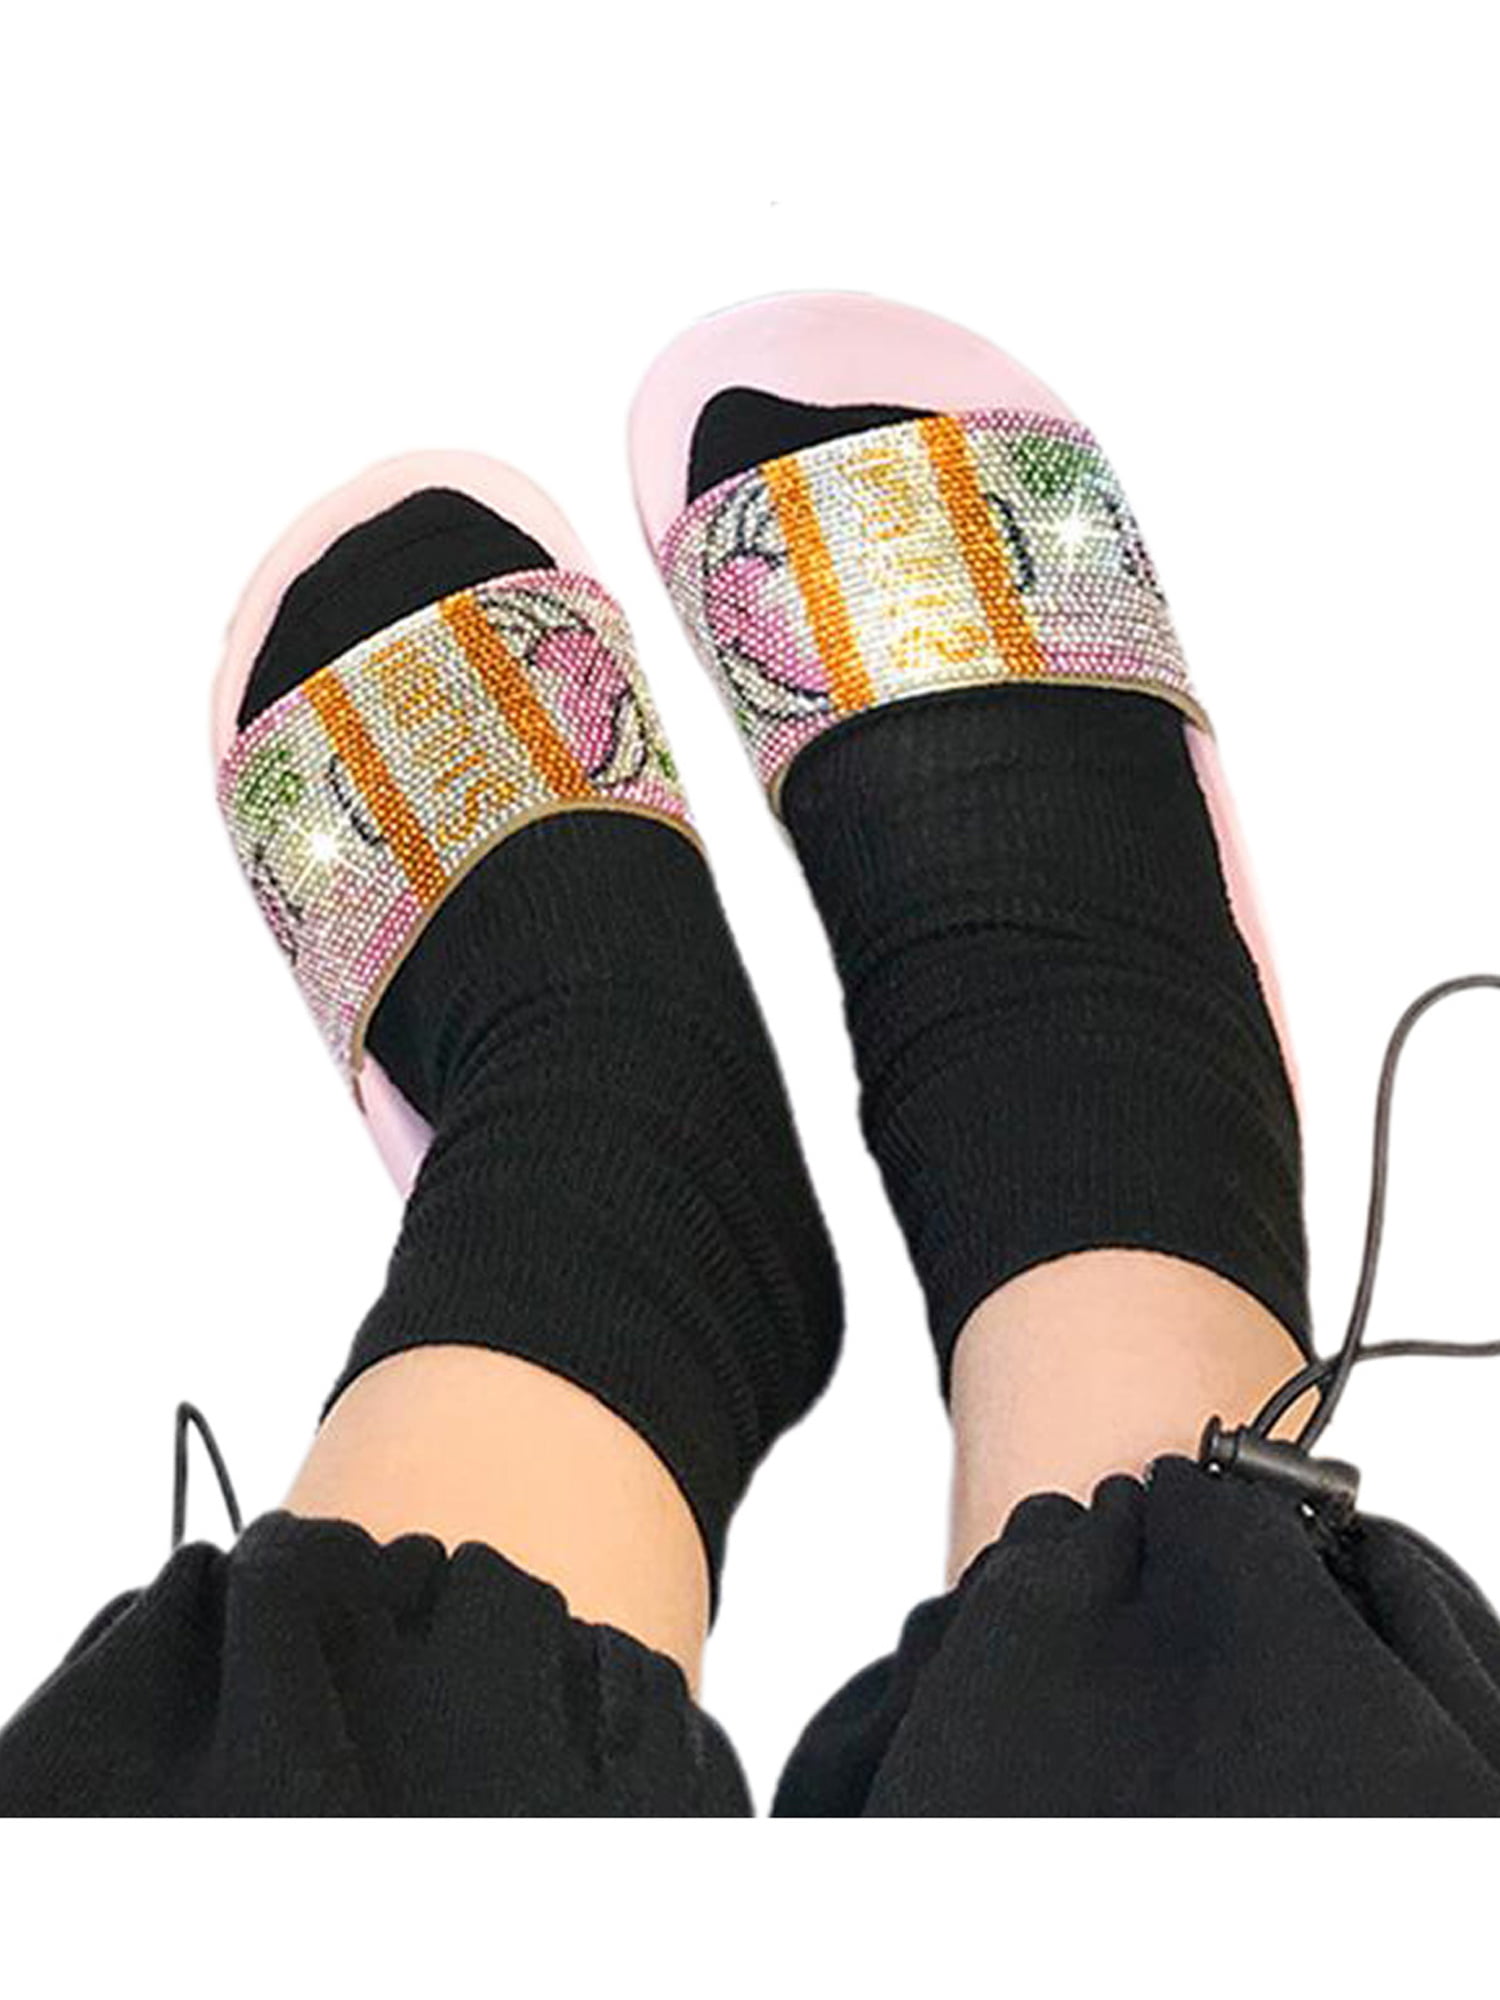 Womens Flat Slip On Mule Summer Sandals Ladies Casual Beach Sliders Shoes Size 